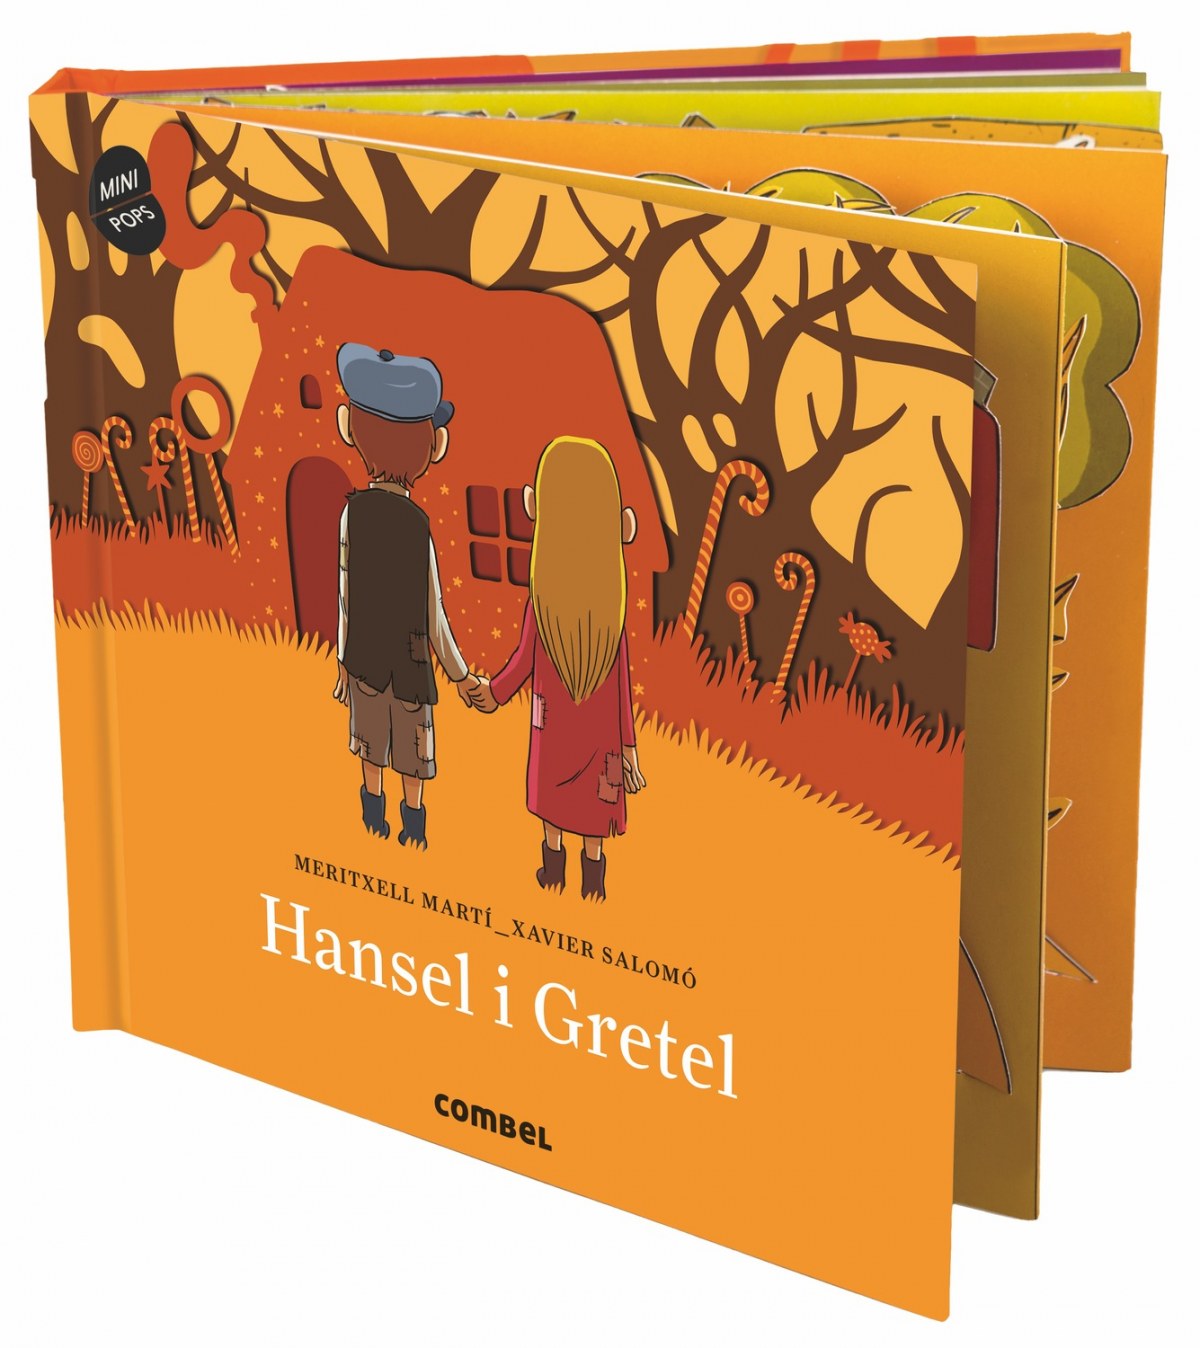 Hansel i Gretel (Mini Pops)